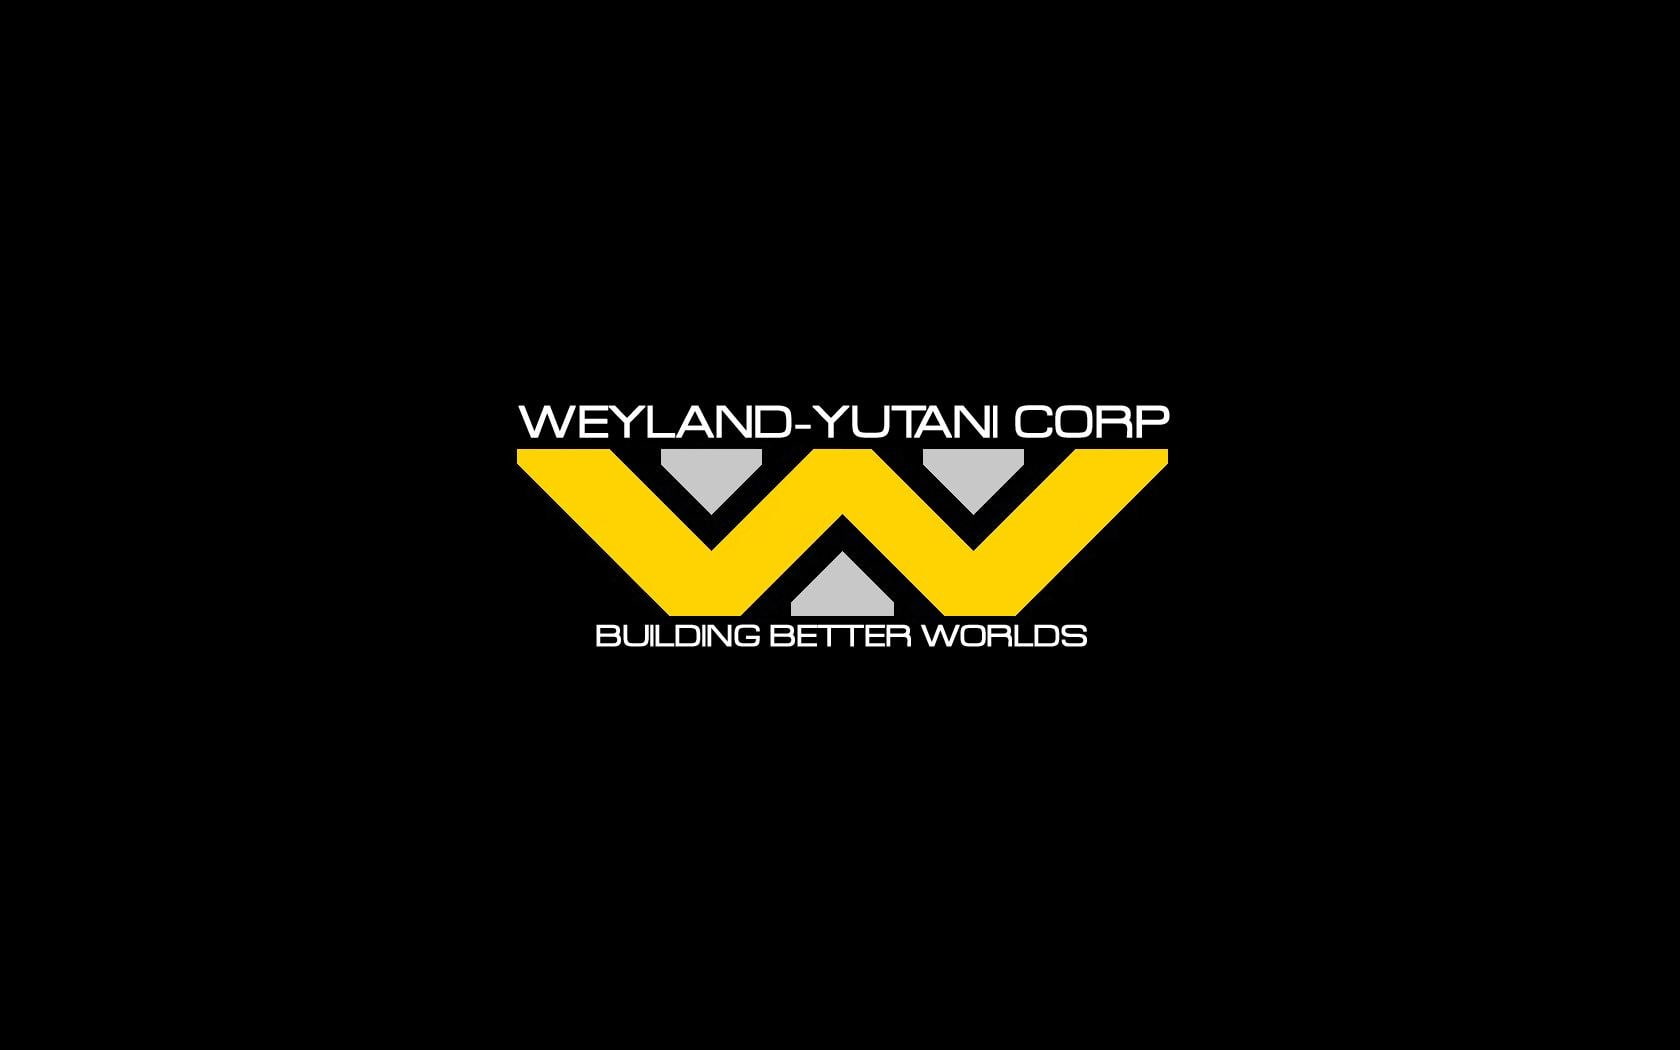 weyland yutani corporation alien movie aliens movie, communication